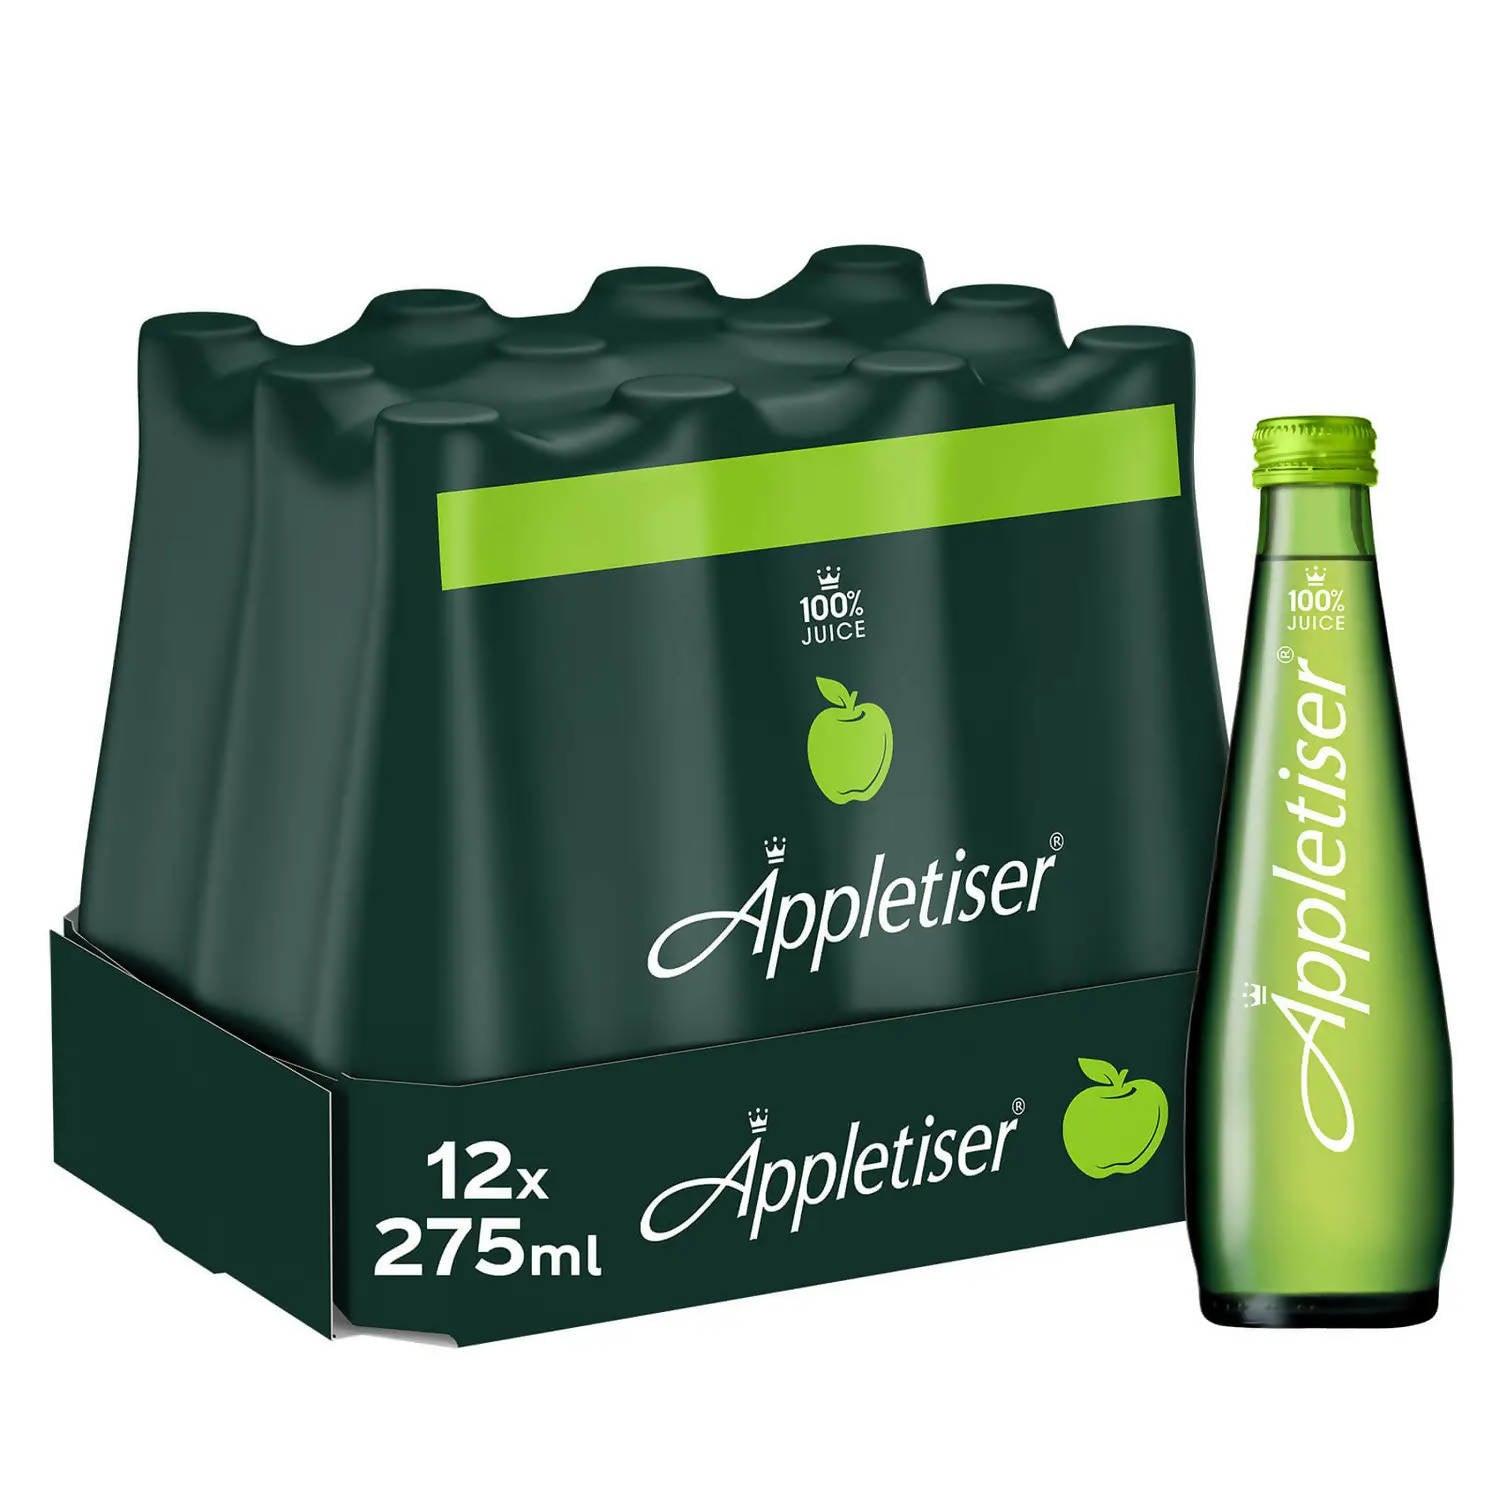 Appletiser, 12 x 275ml Soft Drinks Costco UK   